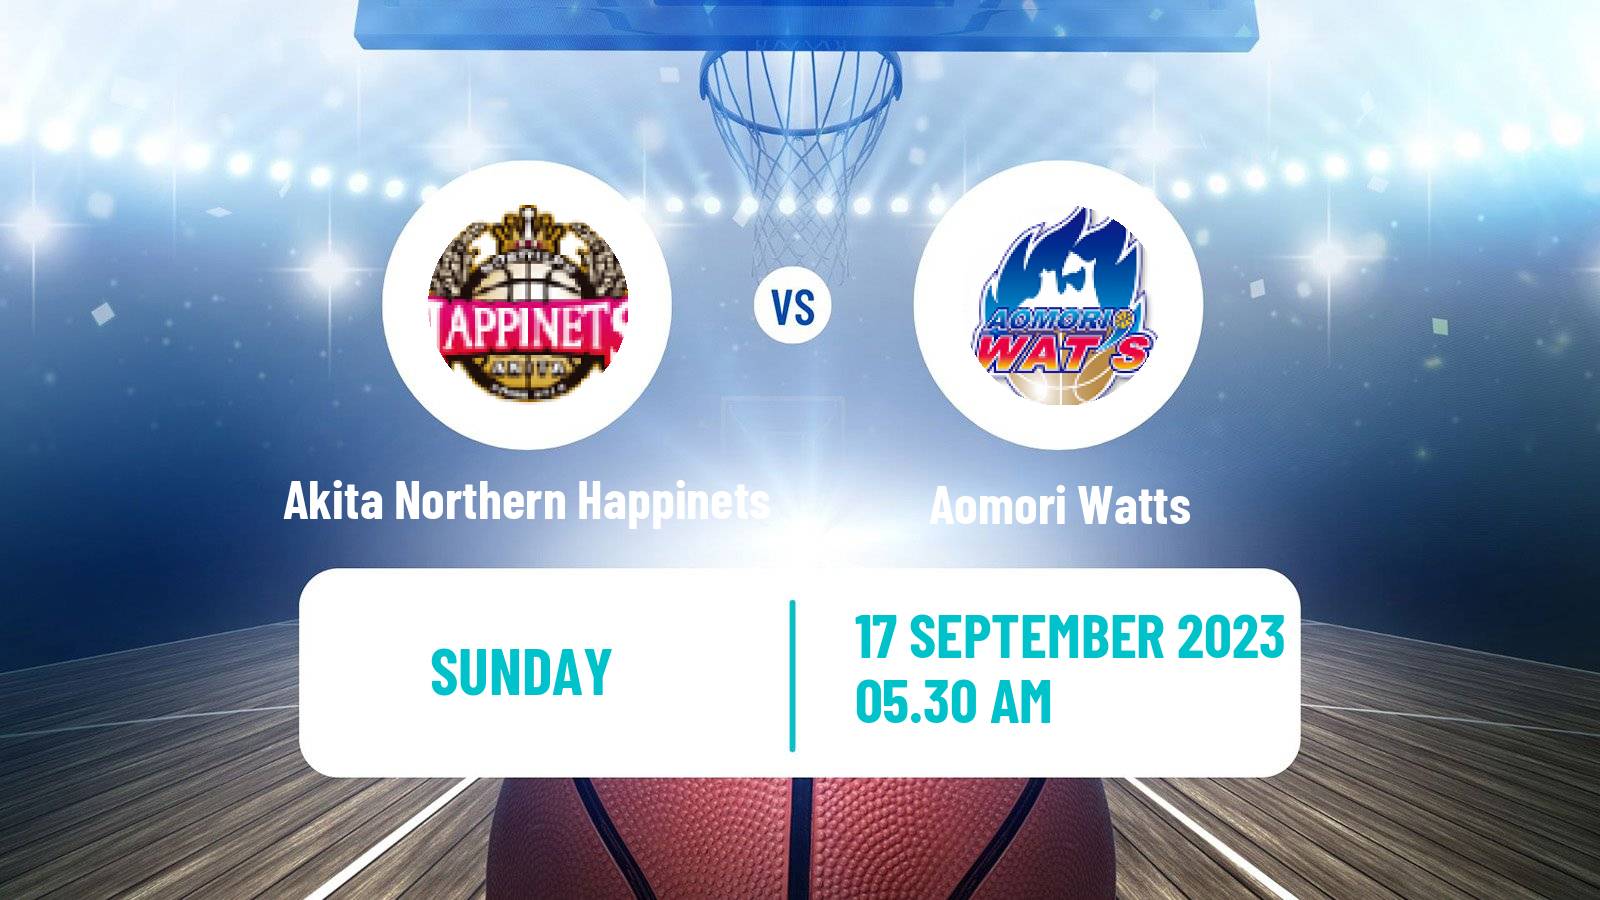 Basketball Club Friendly Basketball Akita Northern Happinets - Aomori Watts